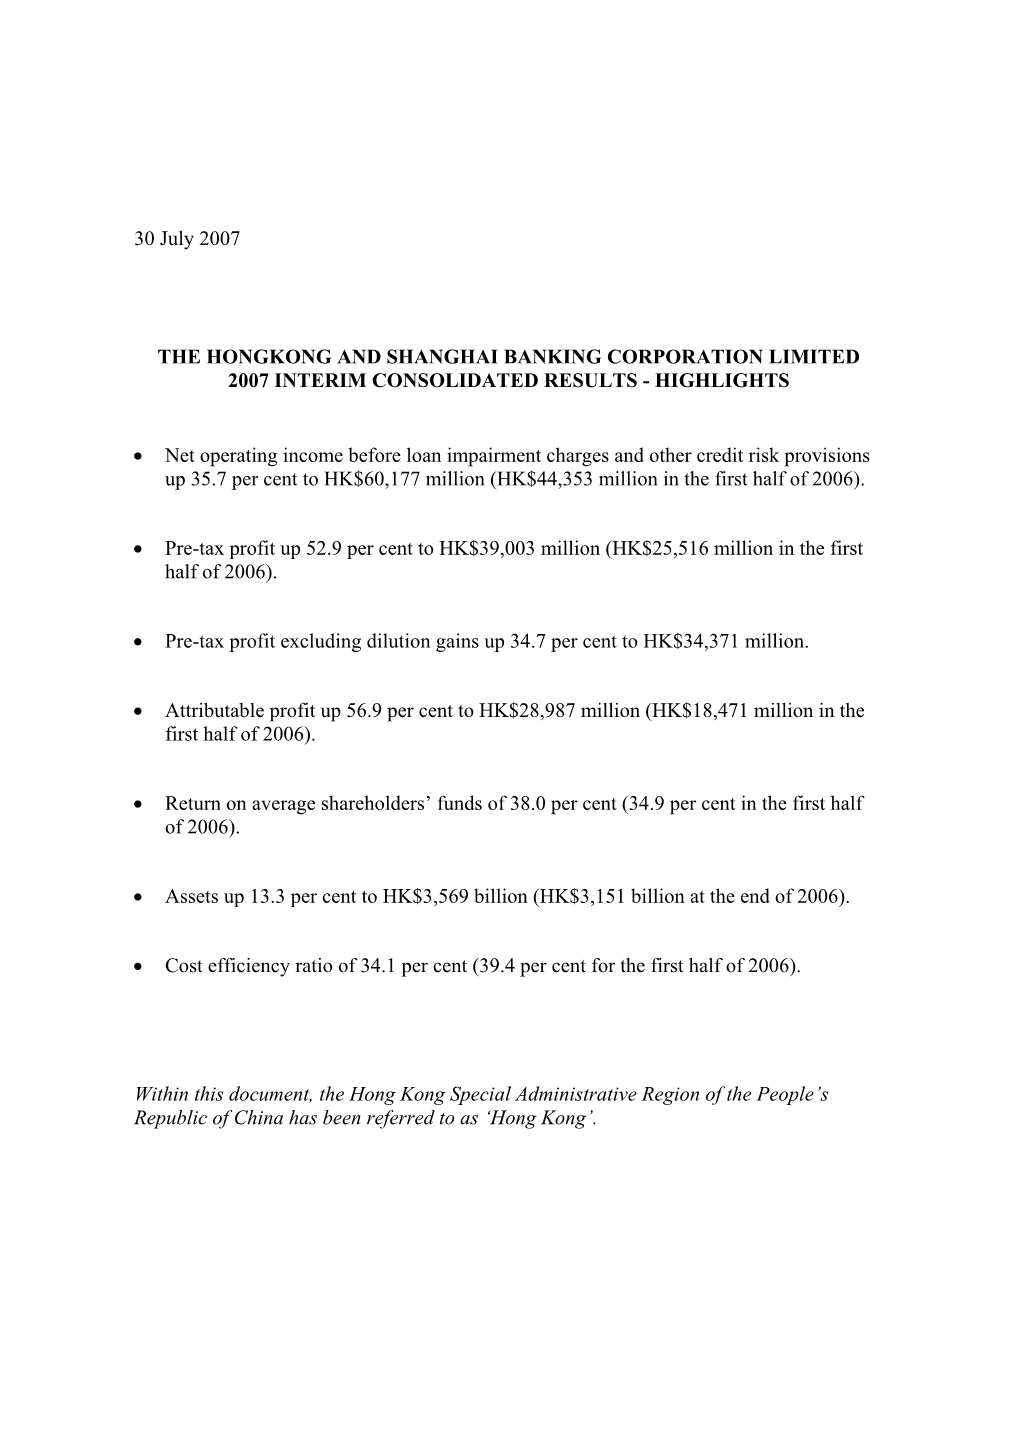 The Hongkong and Shanghai Banking Corporation Limited 2007 Interim Consolidated Results - Highlights